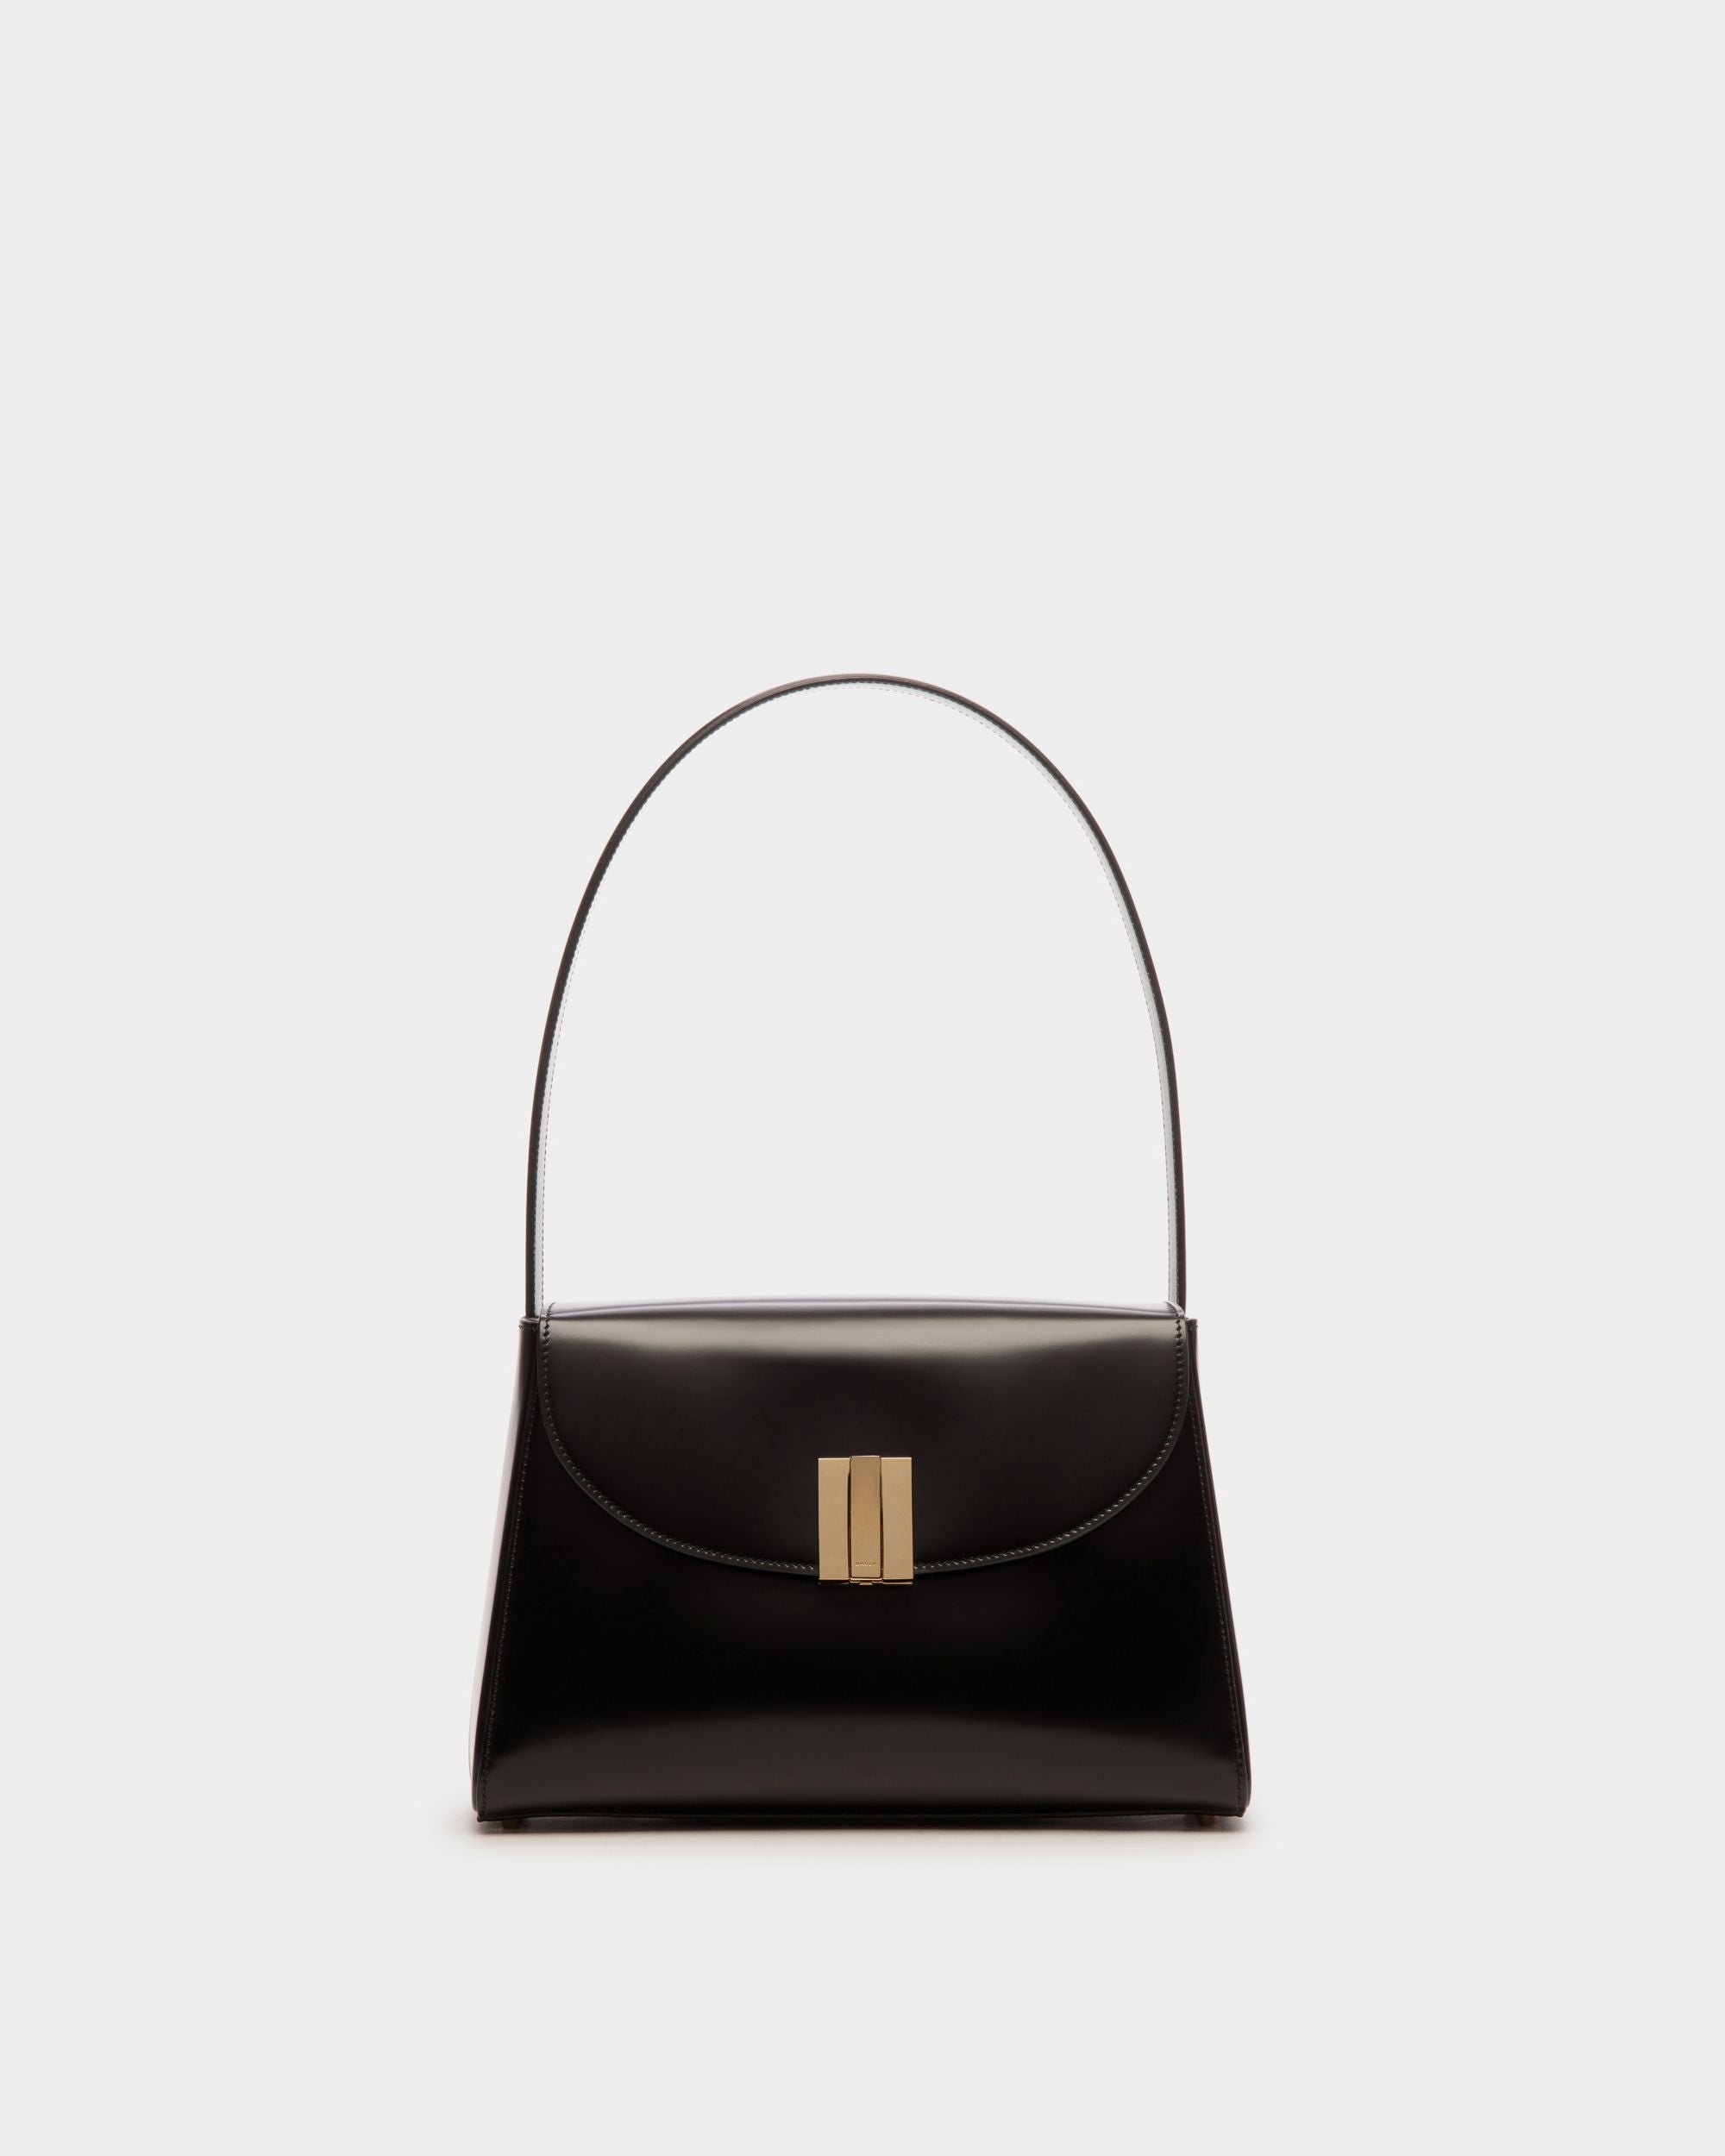 Ollam | Women's Shoulder Bag in Black Brushed Leather | Bally | Still Life Front